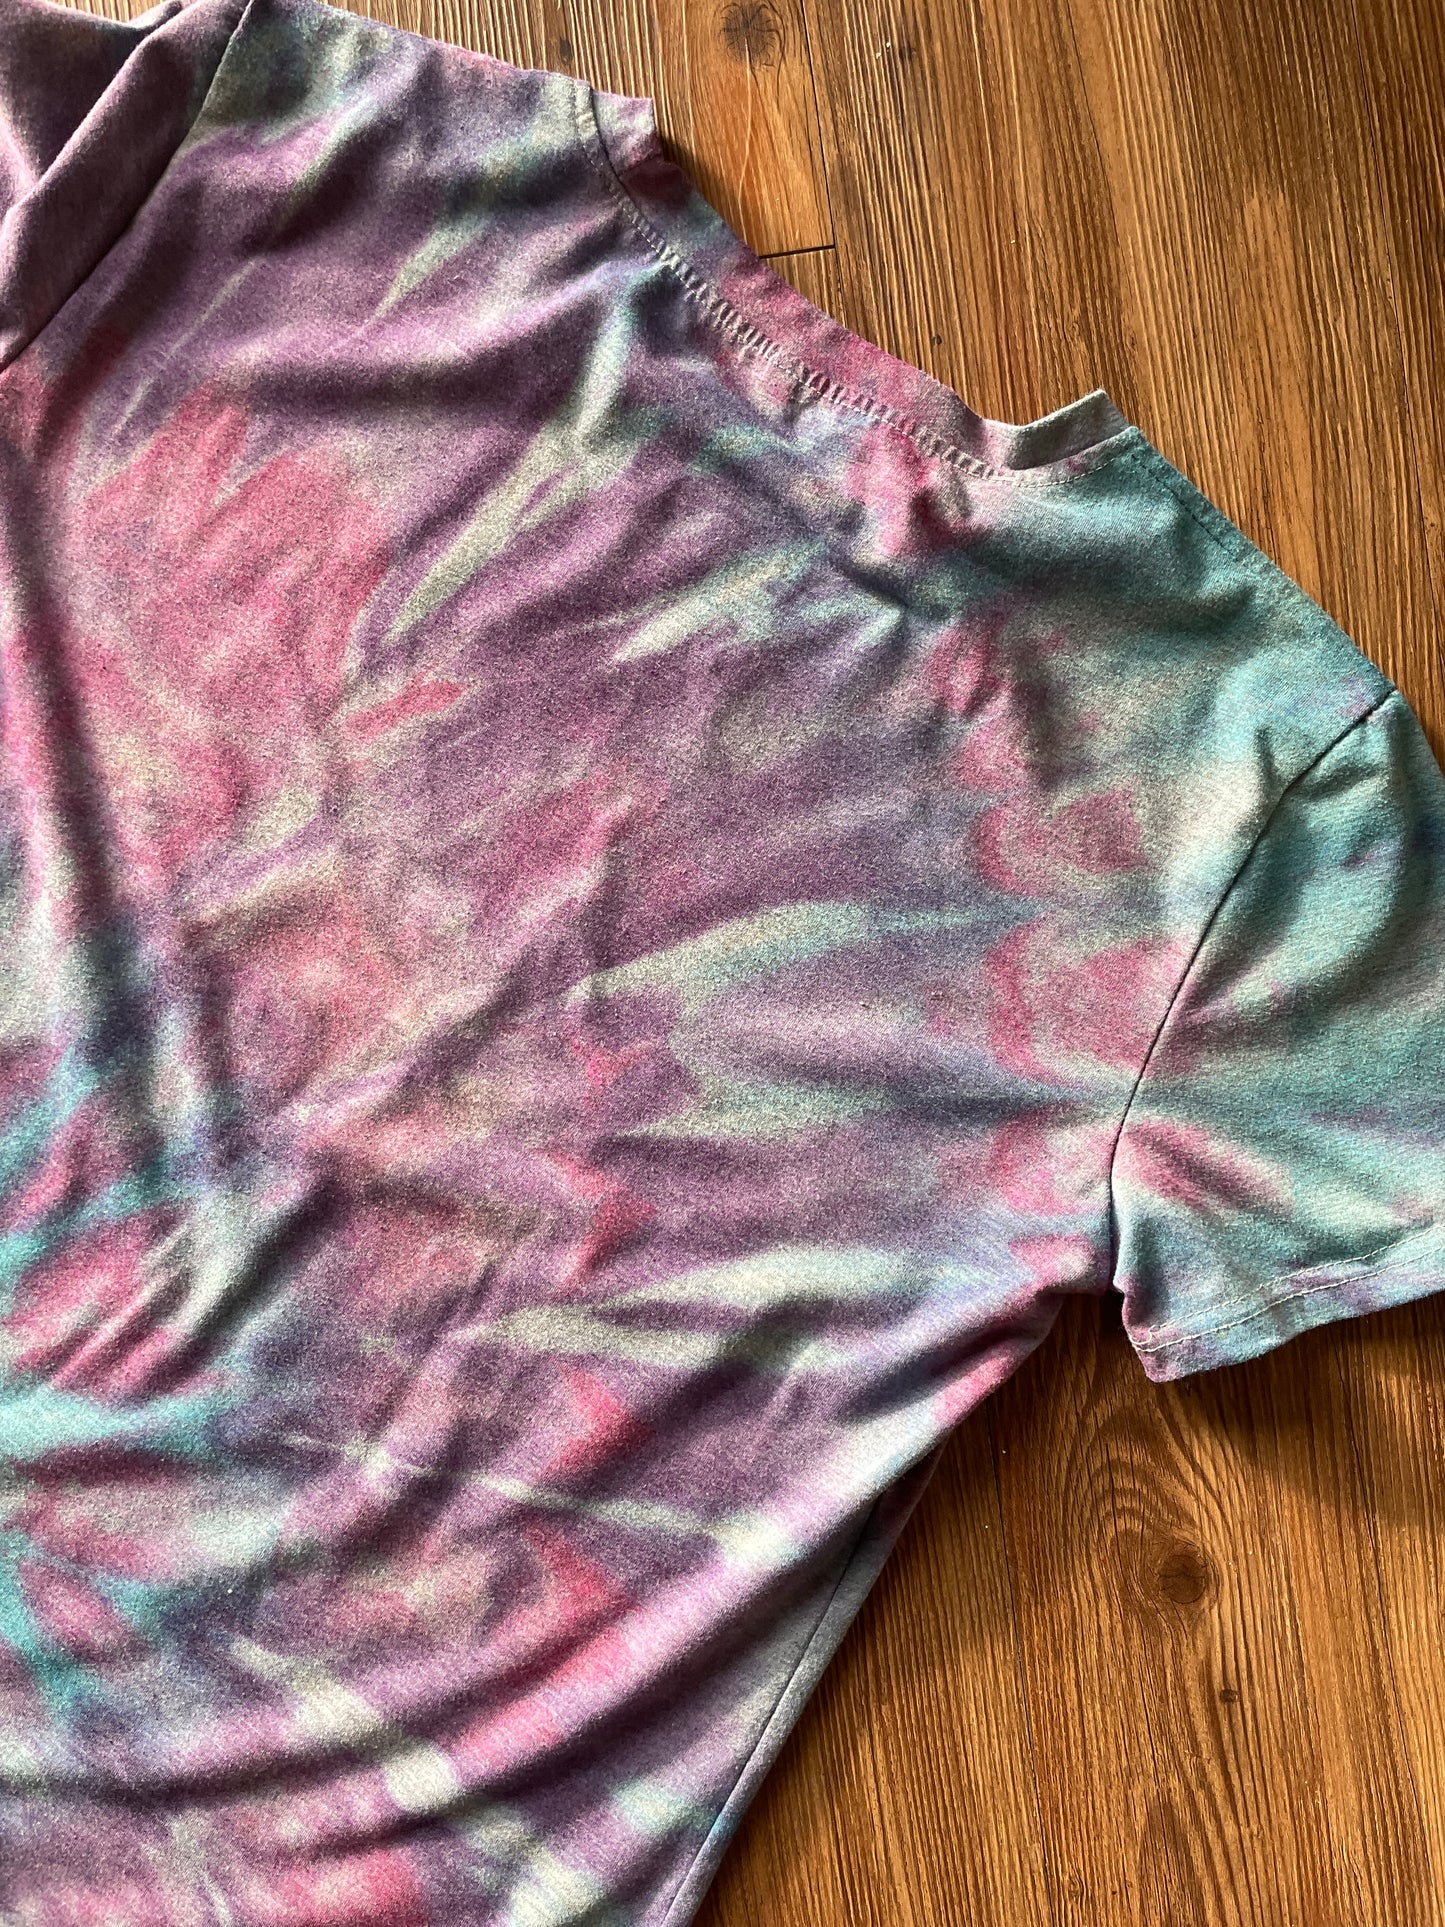 LARGE Men’s Take a Hike Mountains Galaxy Spiral Tie Dye T-Shirt | Pastel Purple and Blue Ice Dye Short Sleeve